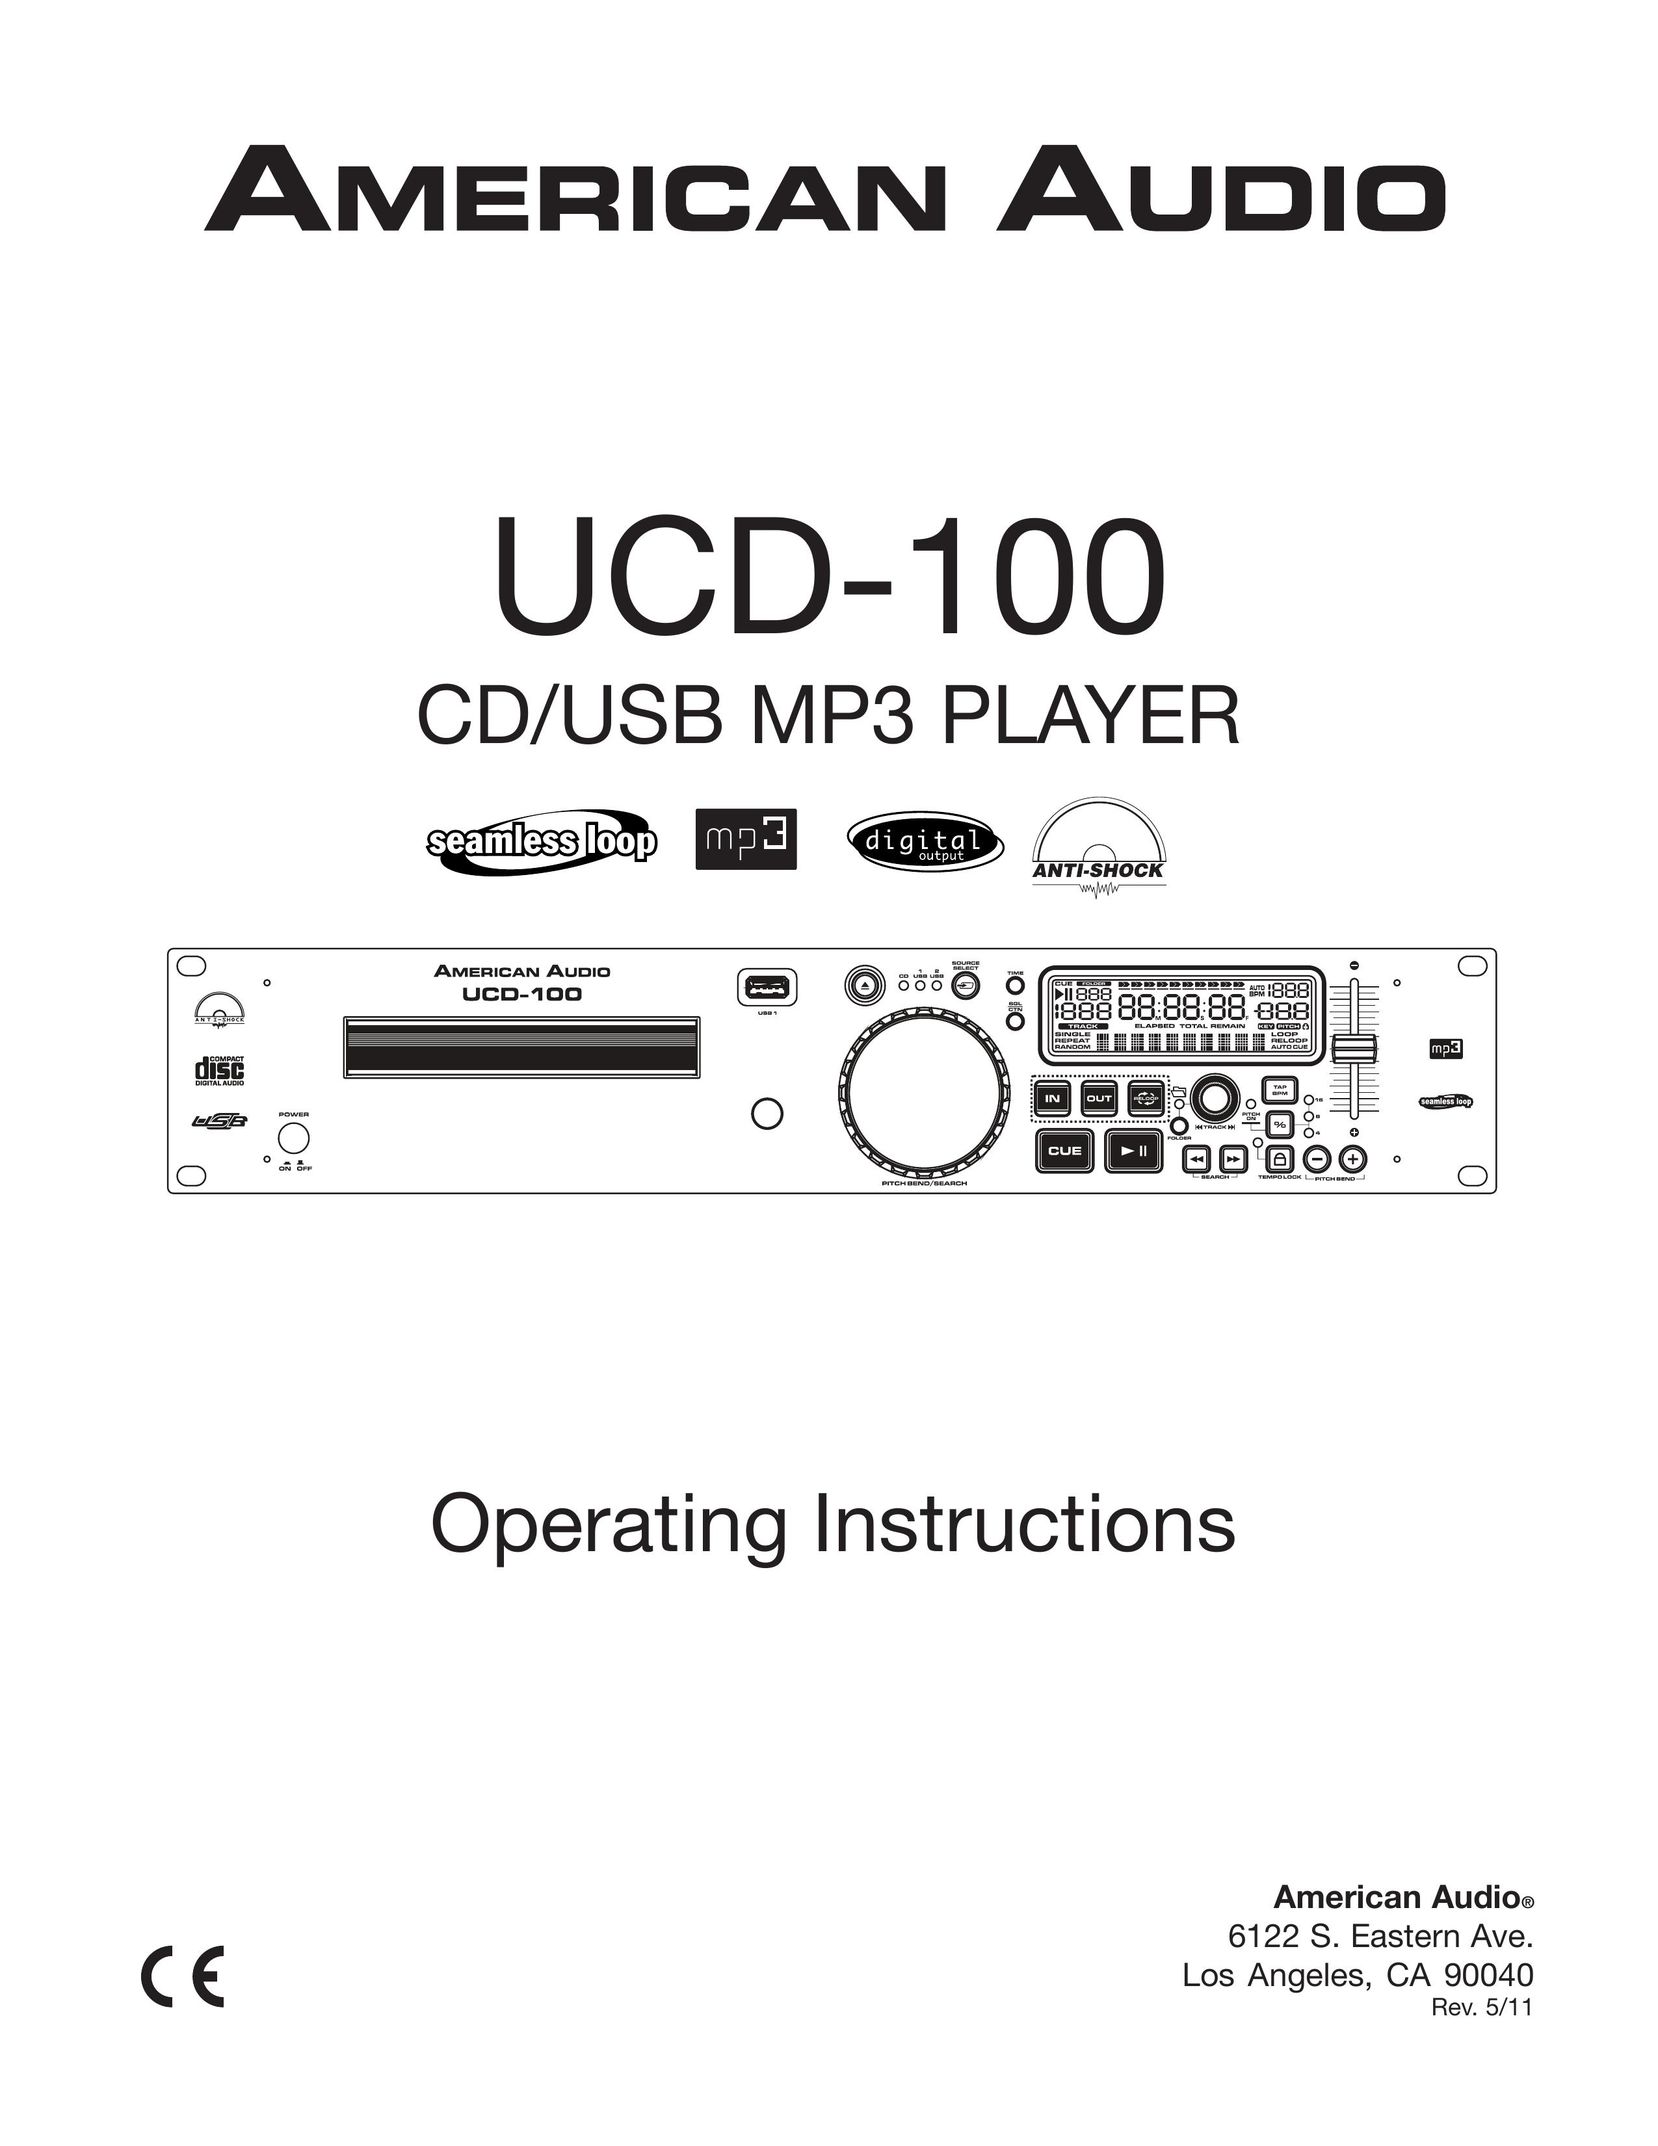 American Audio UCD-100 MP3 Player User Manual